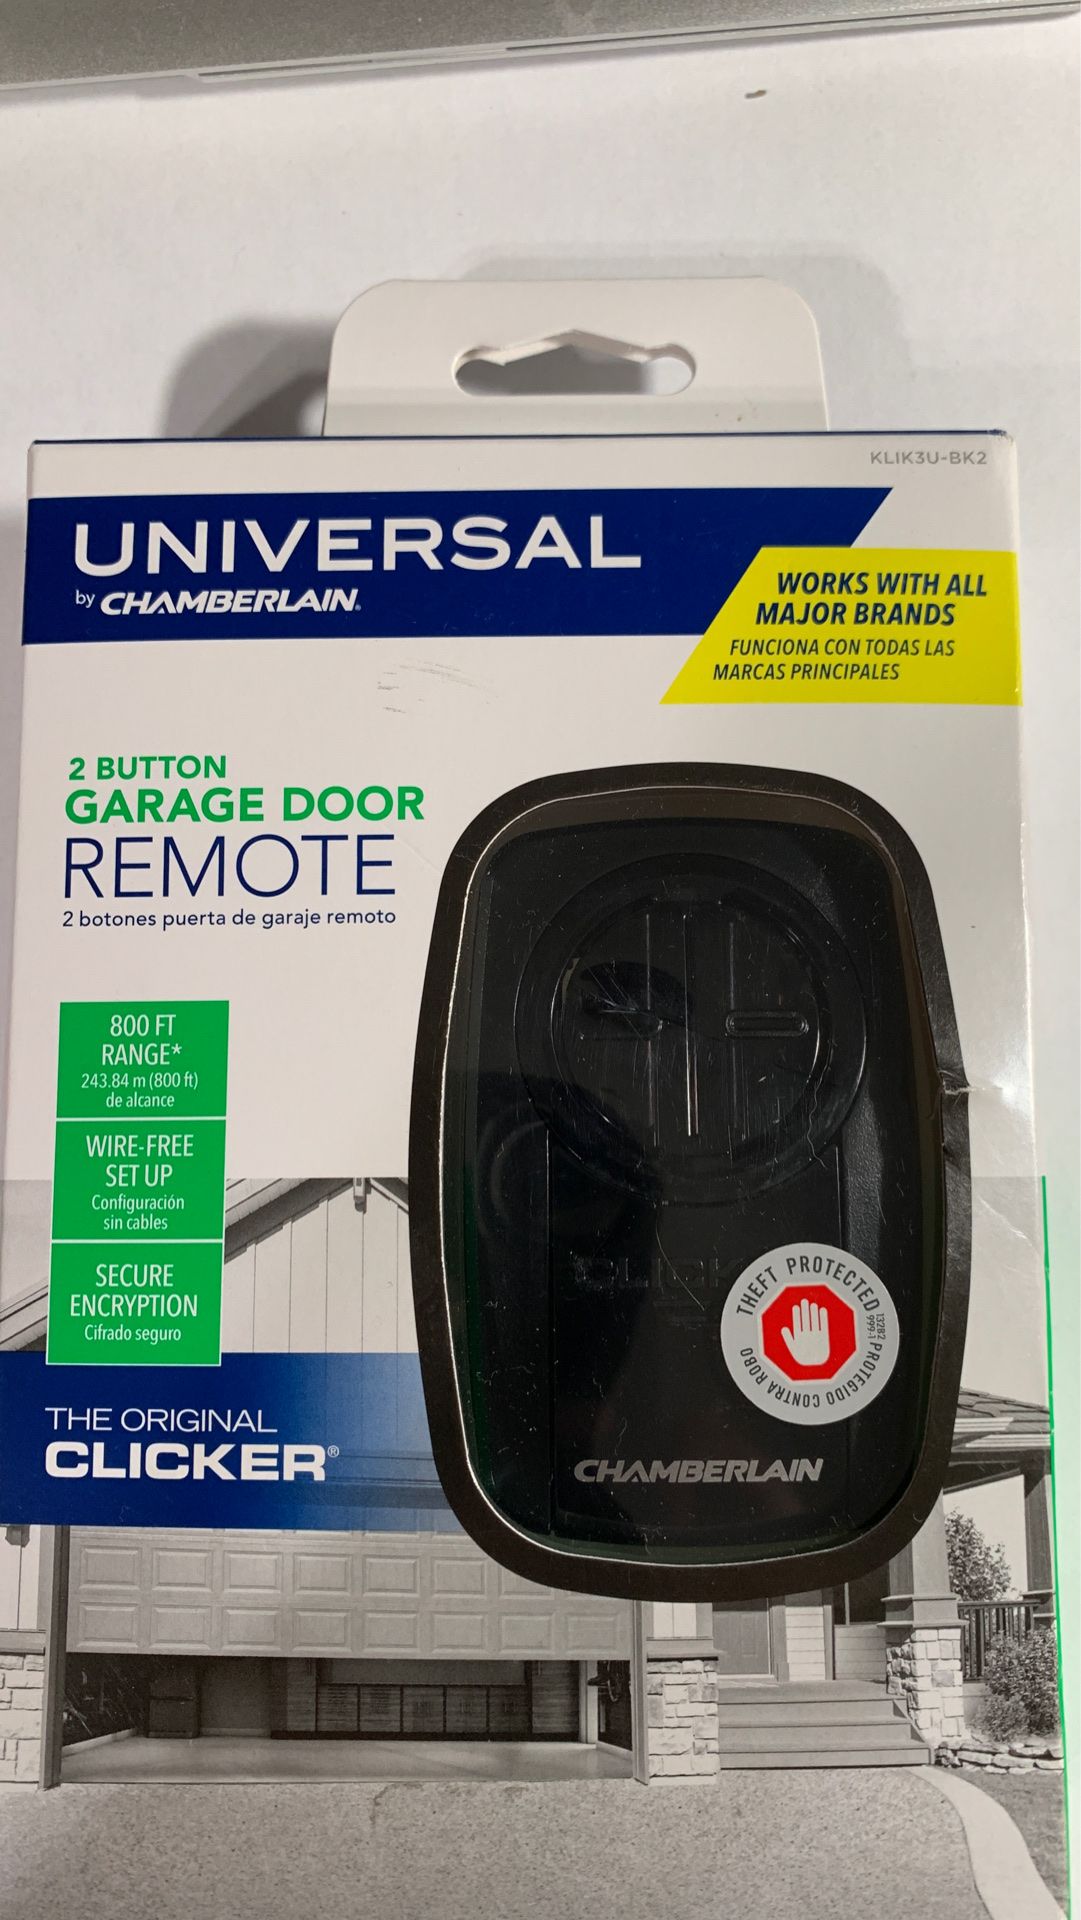 Universal by chamberlain garage door remote